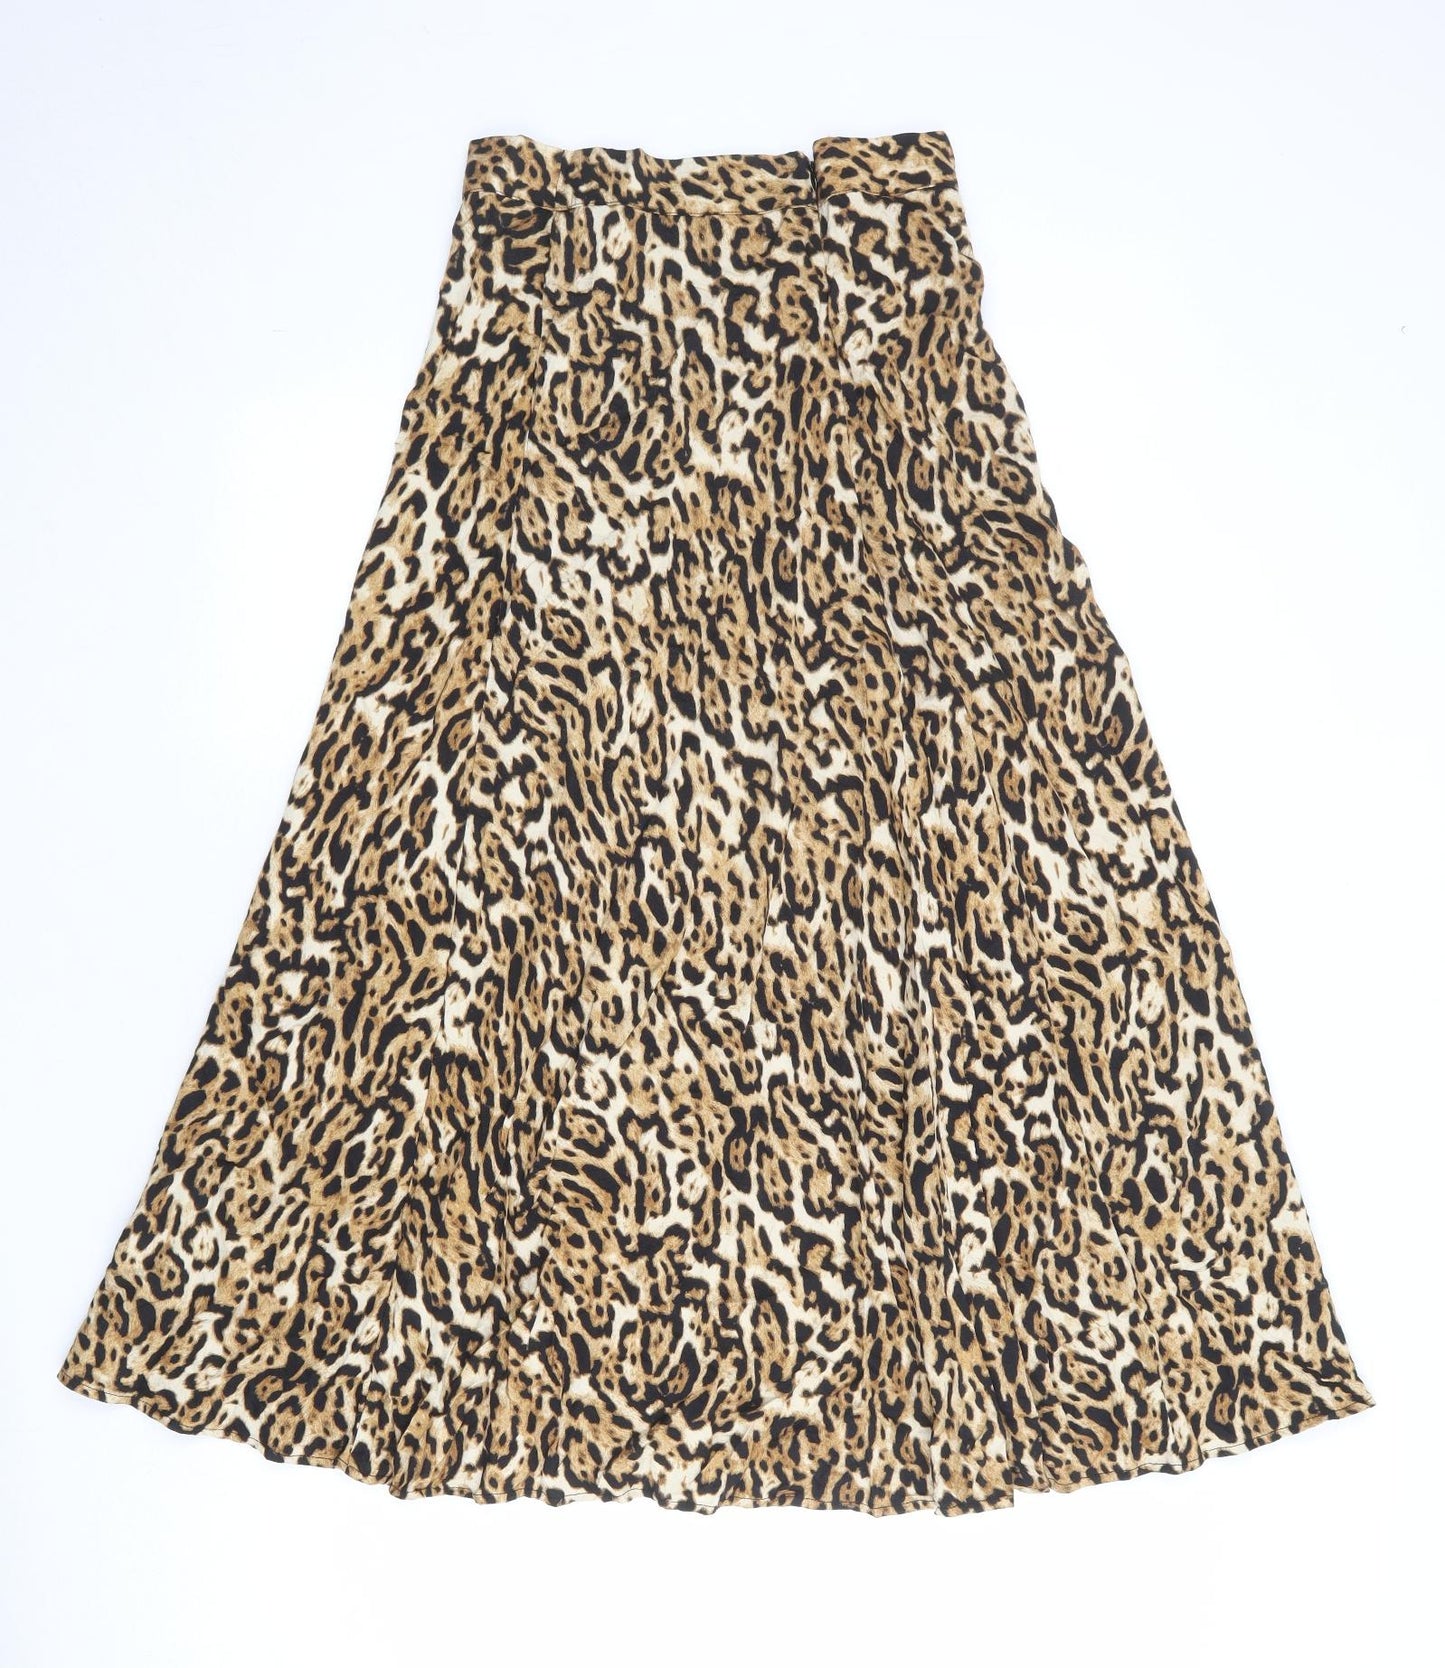 Seed Womens Multicoloured Animal Print Viscose Swing Skirt Size 8 Zip - Leopard pattern